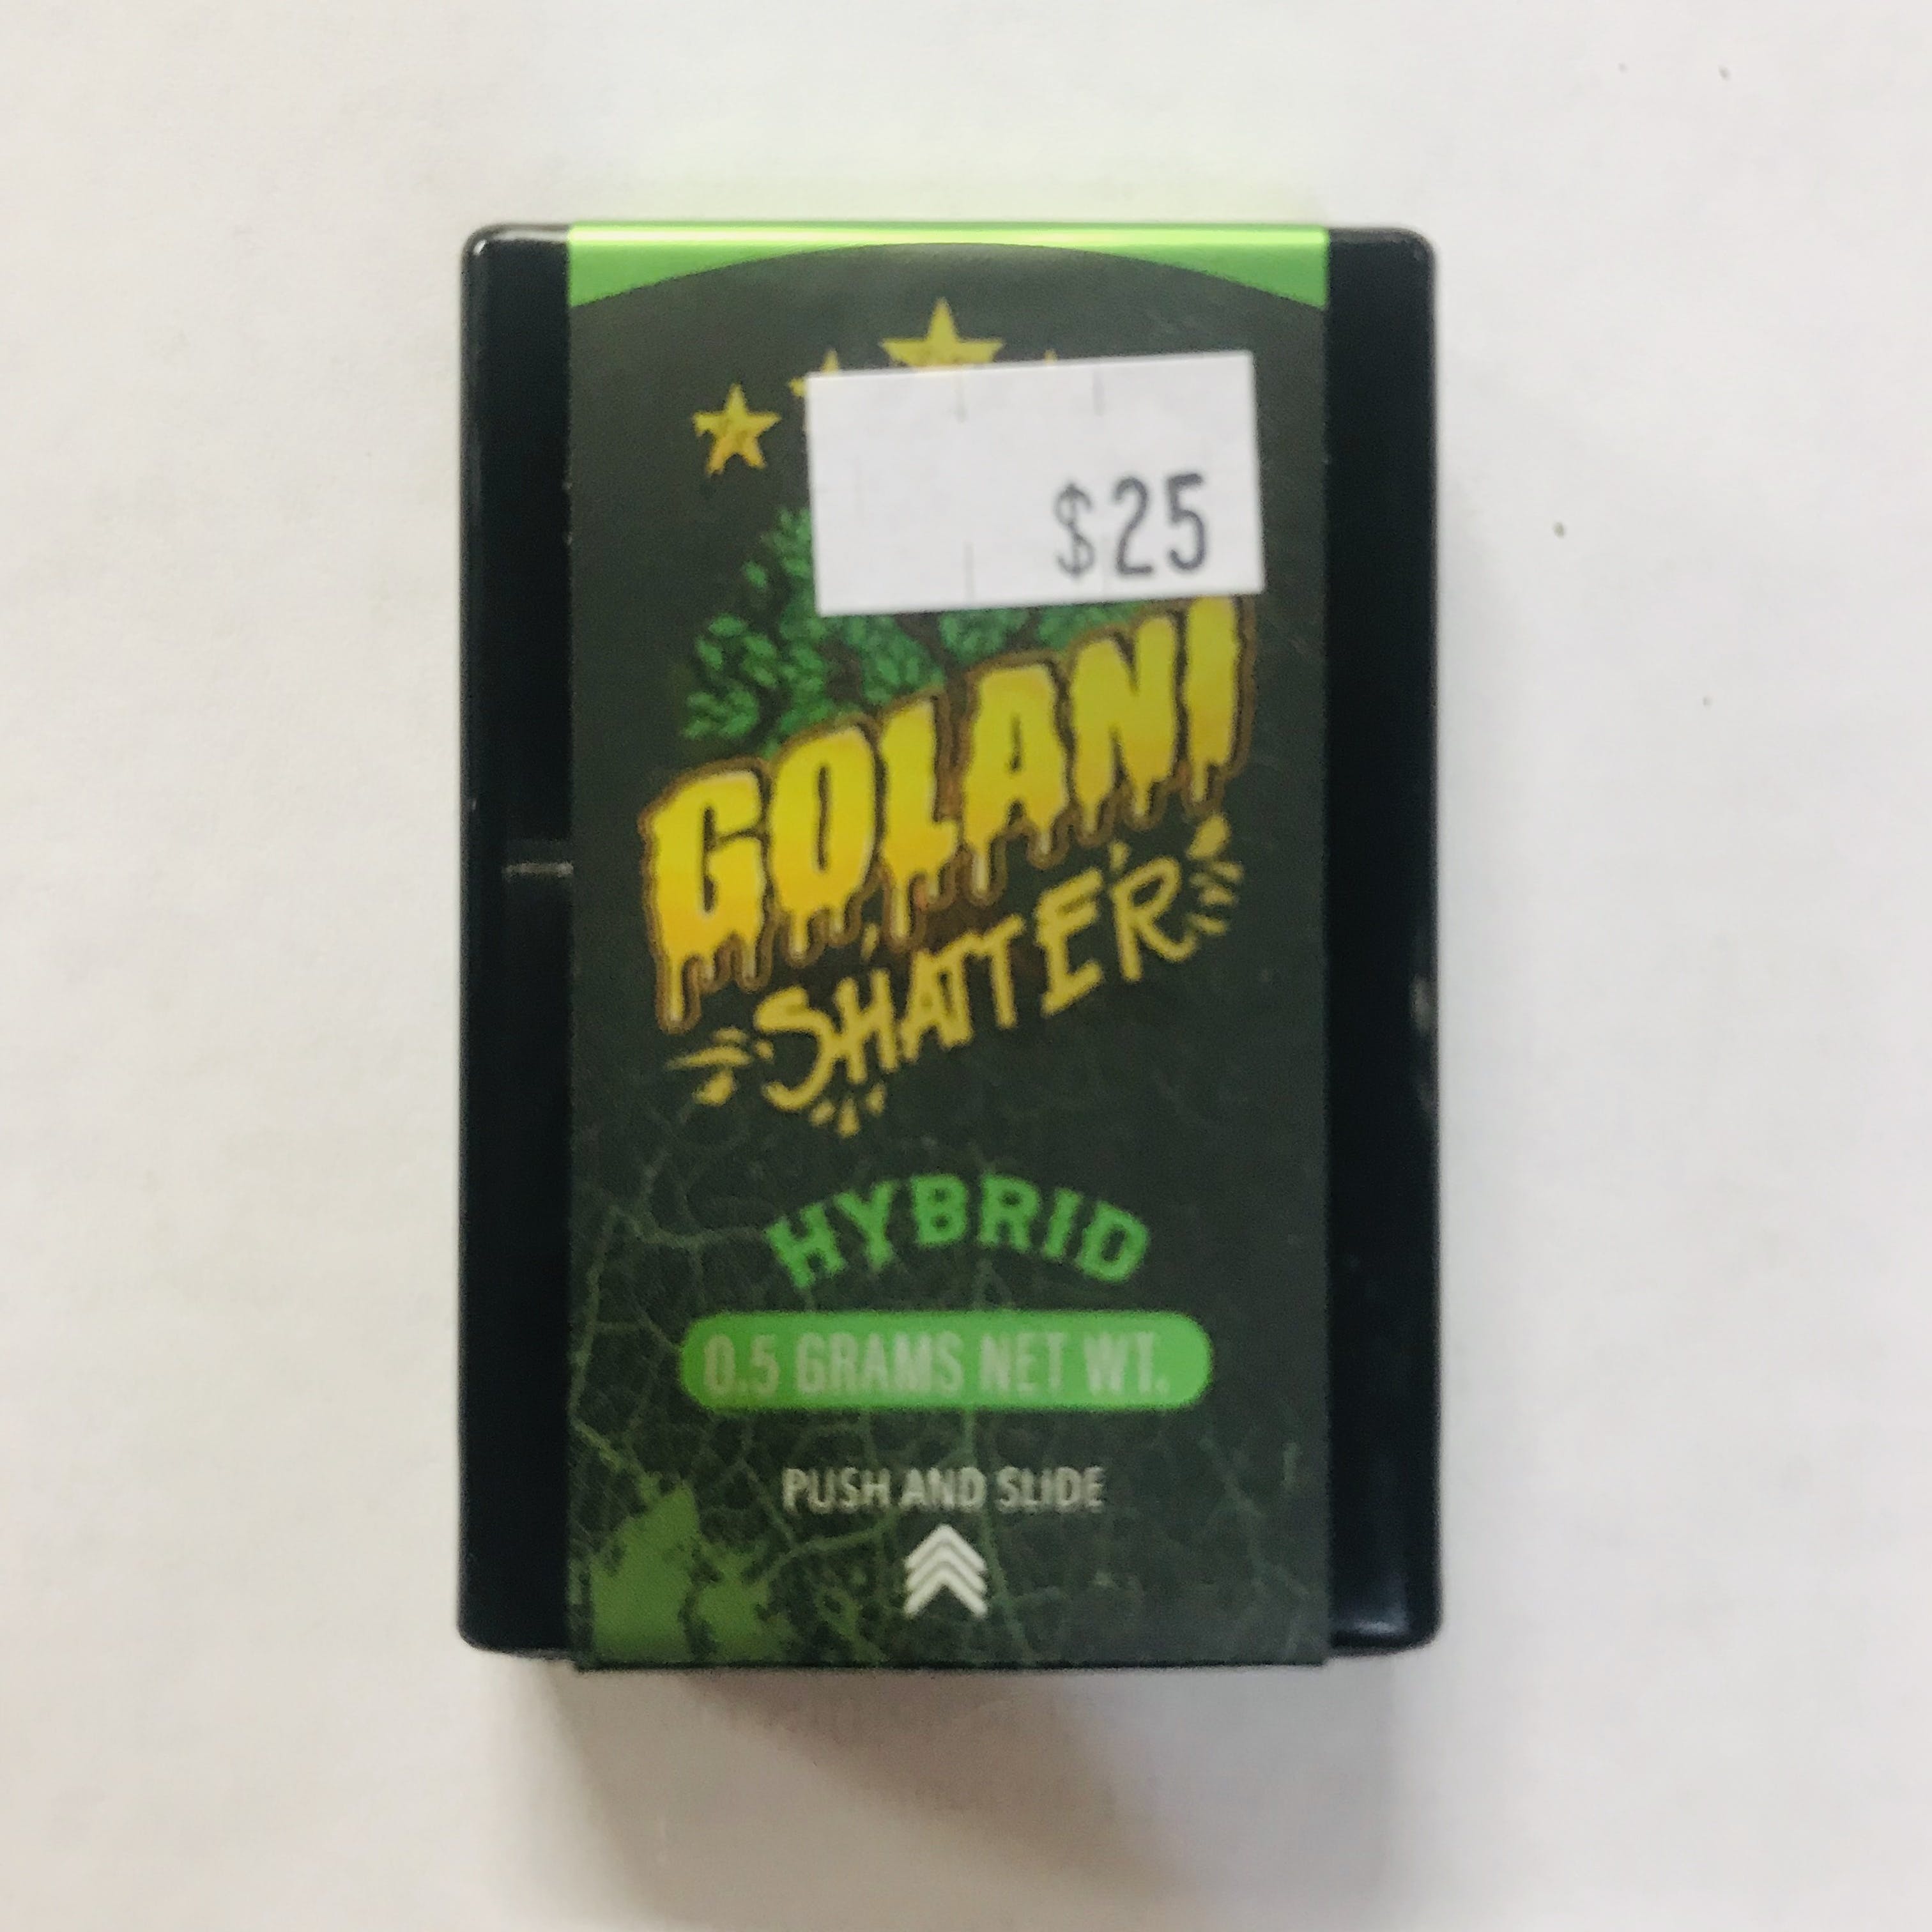 Golani Shatter, Gorilla Cookies (Hybrid) 0.5g